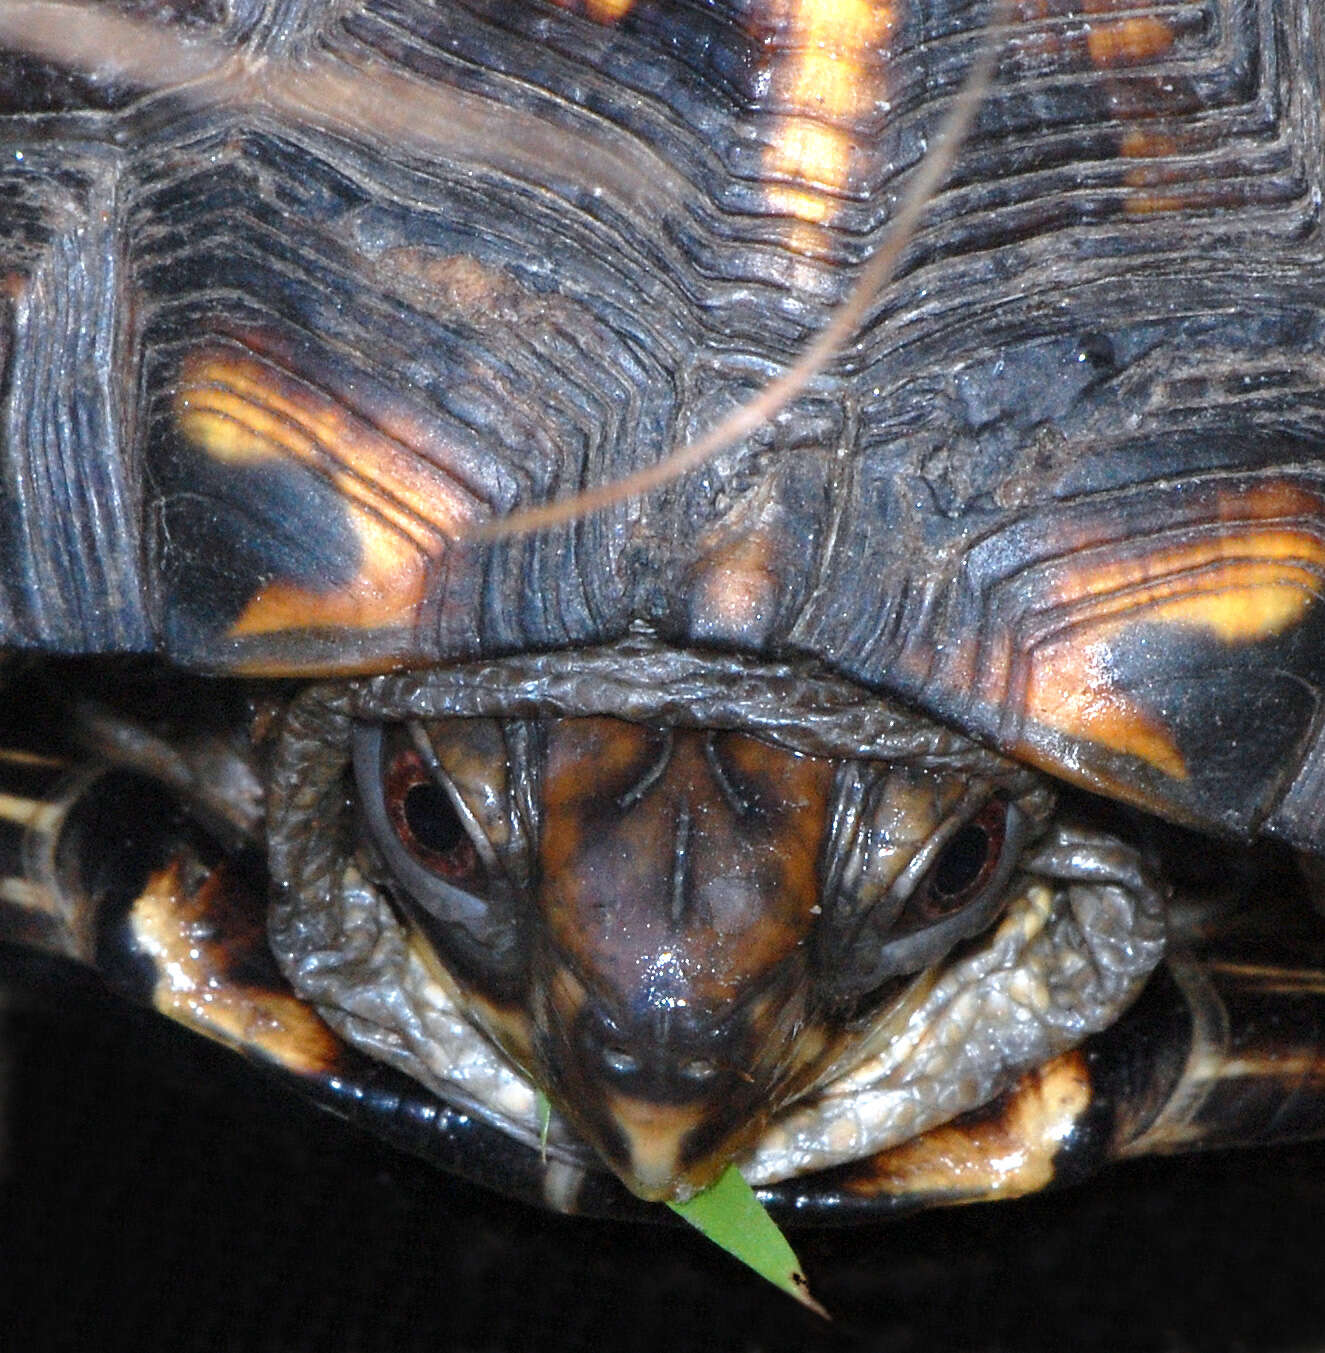 Image of Eastern box turtle